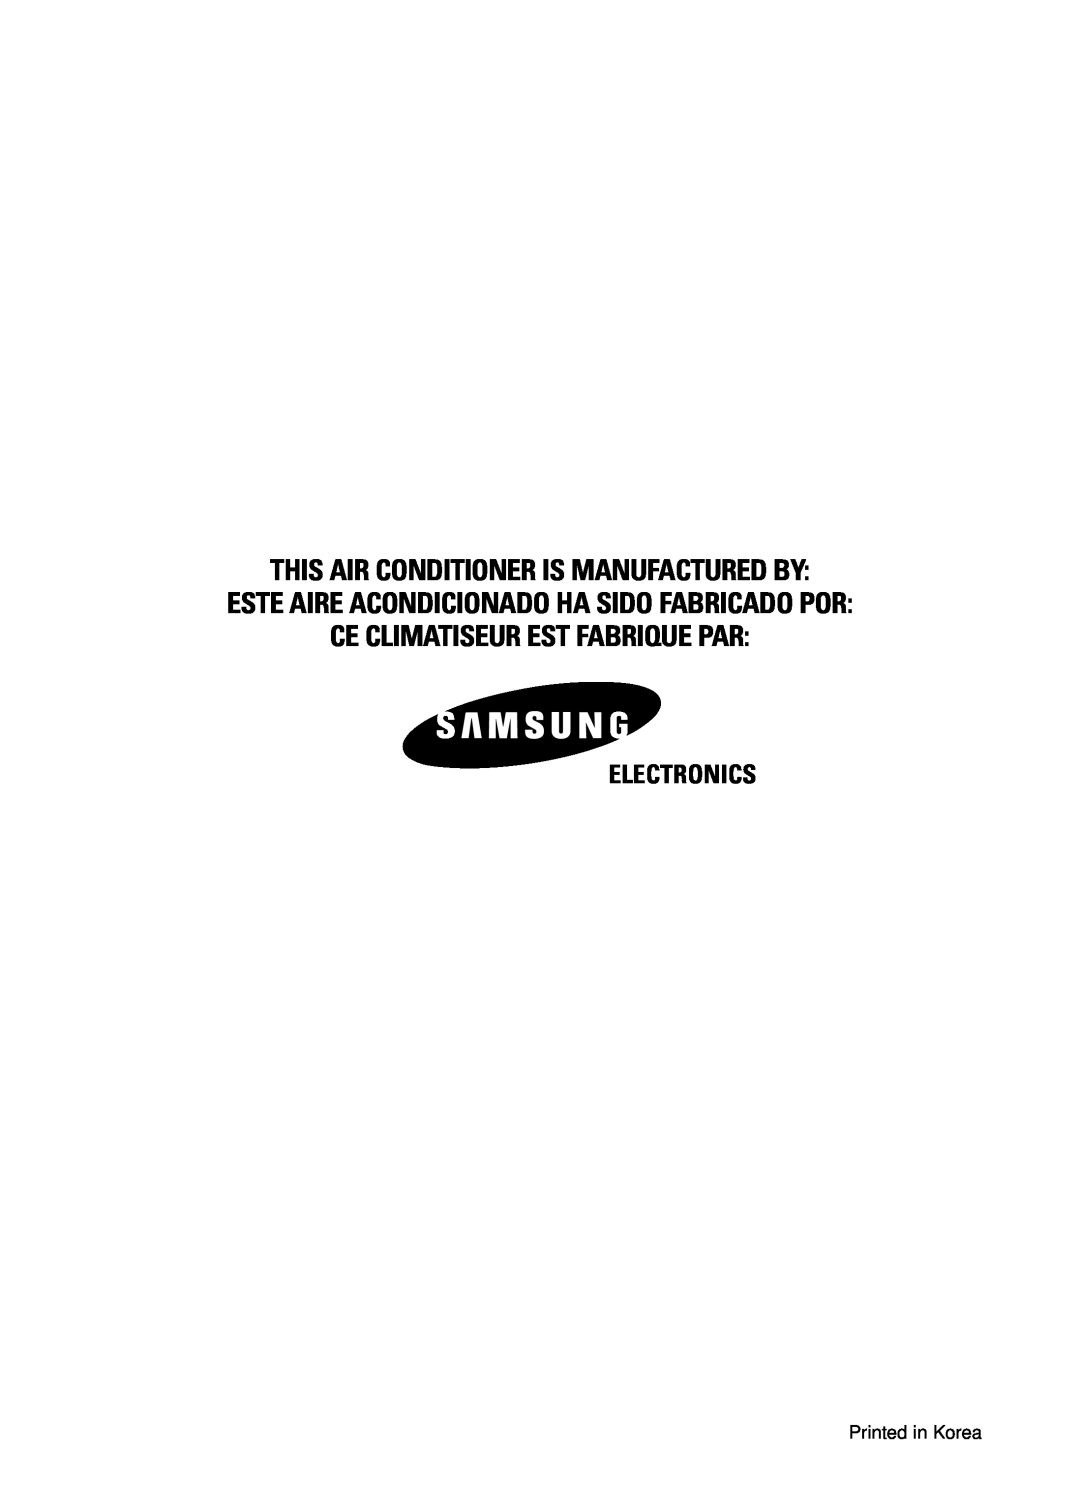 Samsung US09A5(A6)MA This Air Conditioner Is Manufactured By, Este Aire Acondicionado Ha Sido Fabricado Por, Electronics 